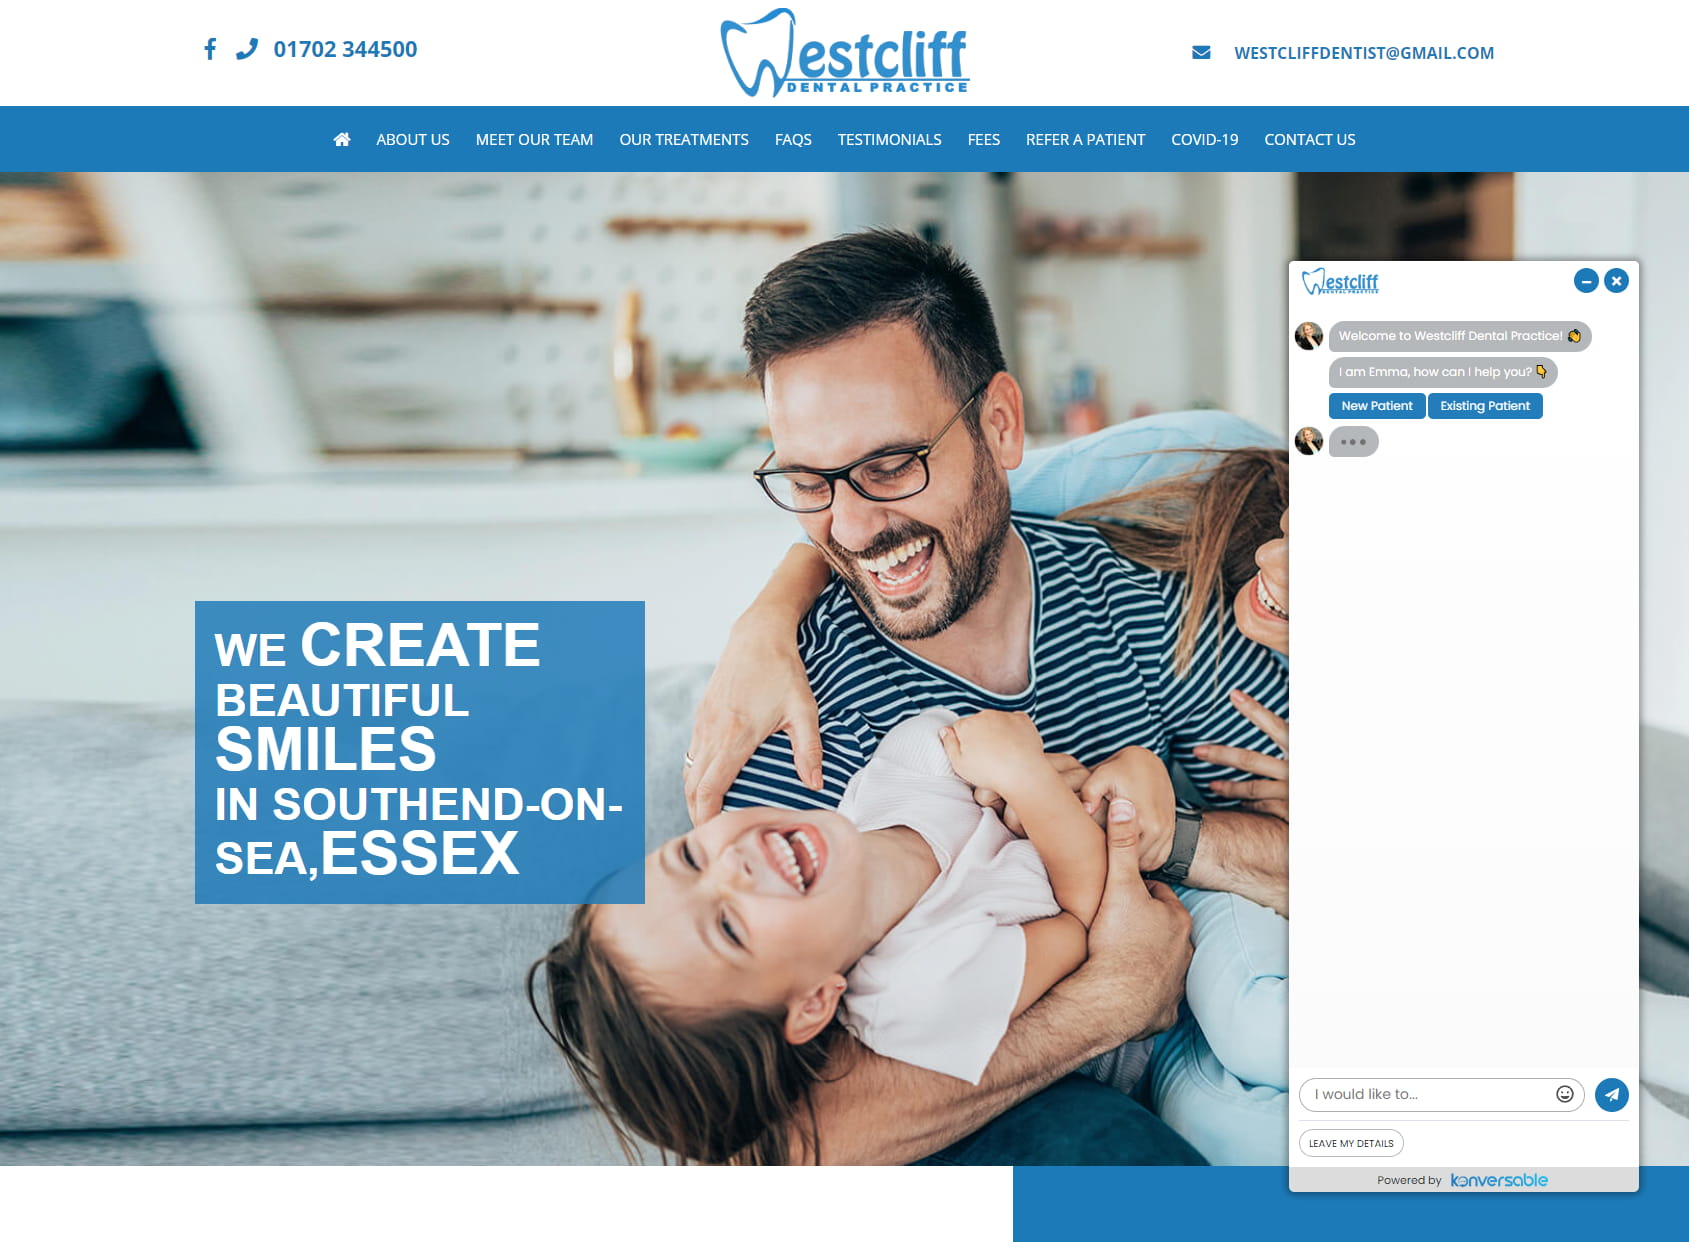 Westcliff Dental Practice